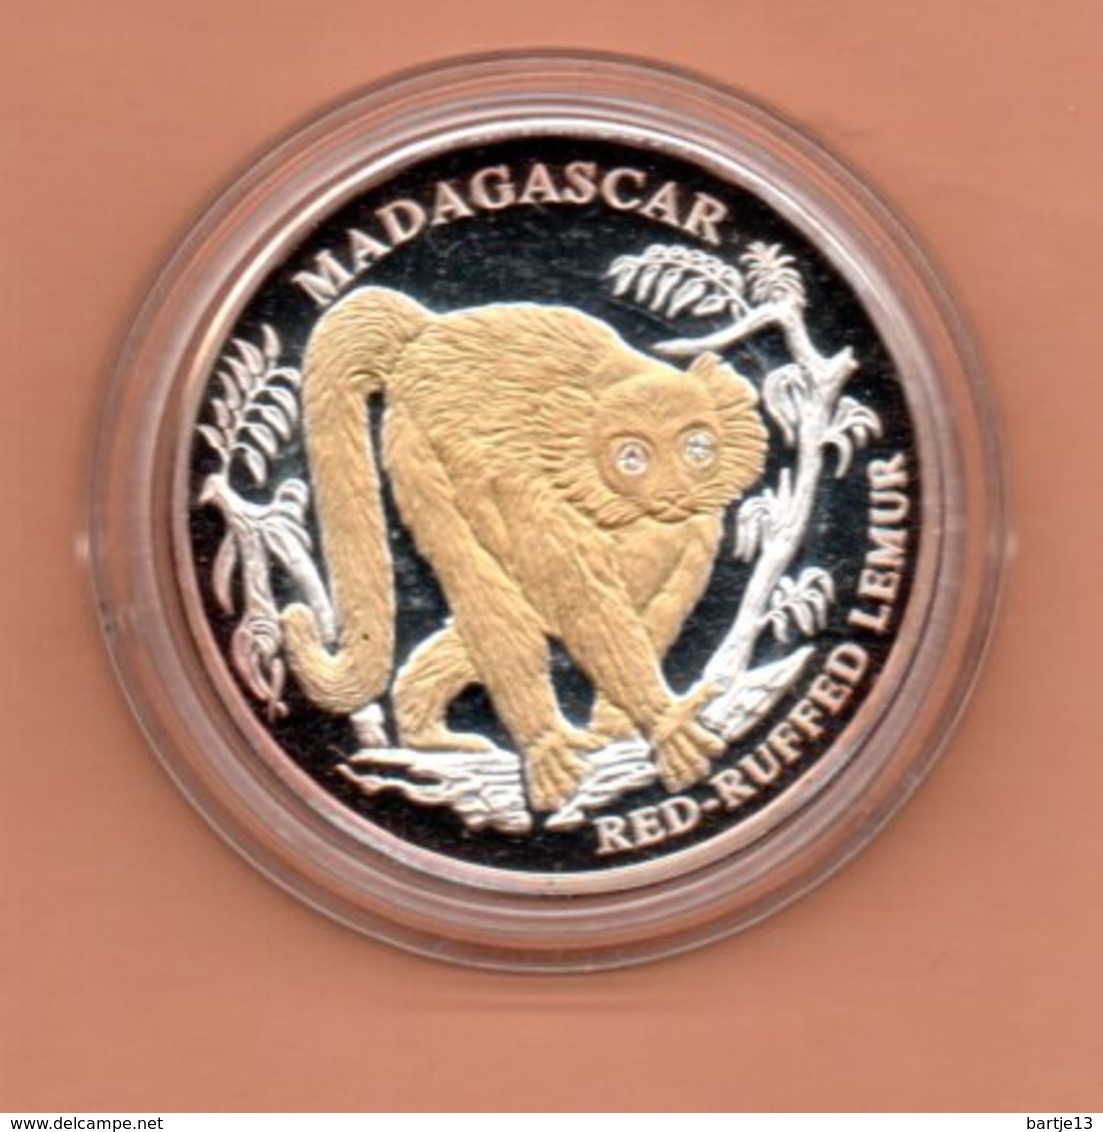 LIBERIA $10 2004 MADAGASCAR RODE AAP SILVER PROOF MET 24 KT GOUD EN DIAMANT IN OGEN ZEER KLEINE OPLAGE - Liberia